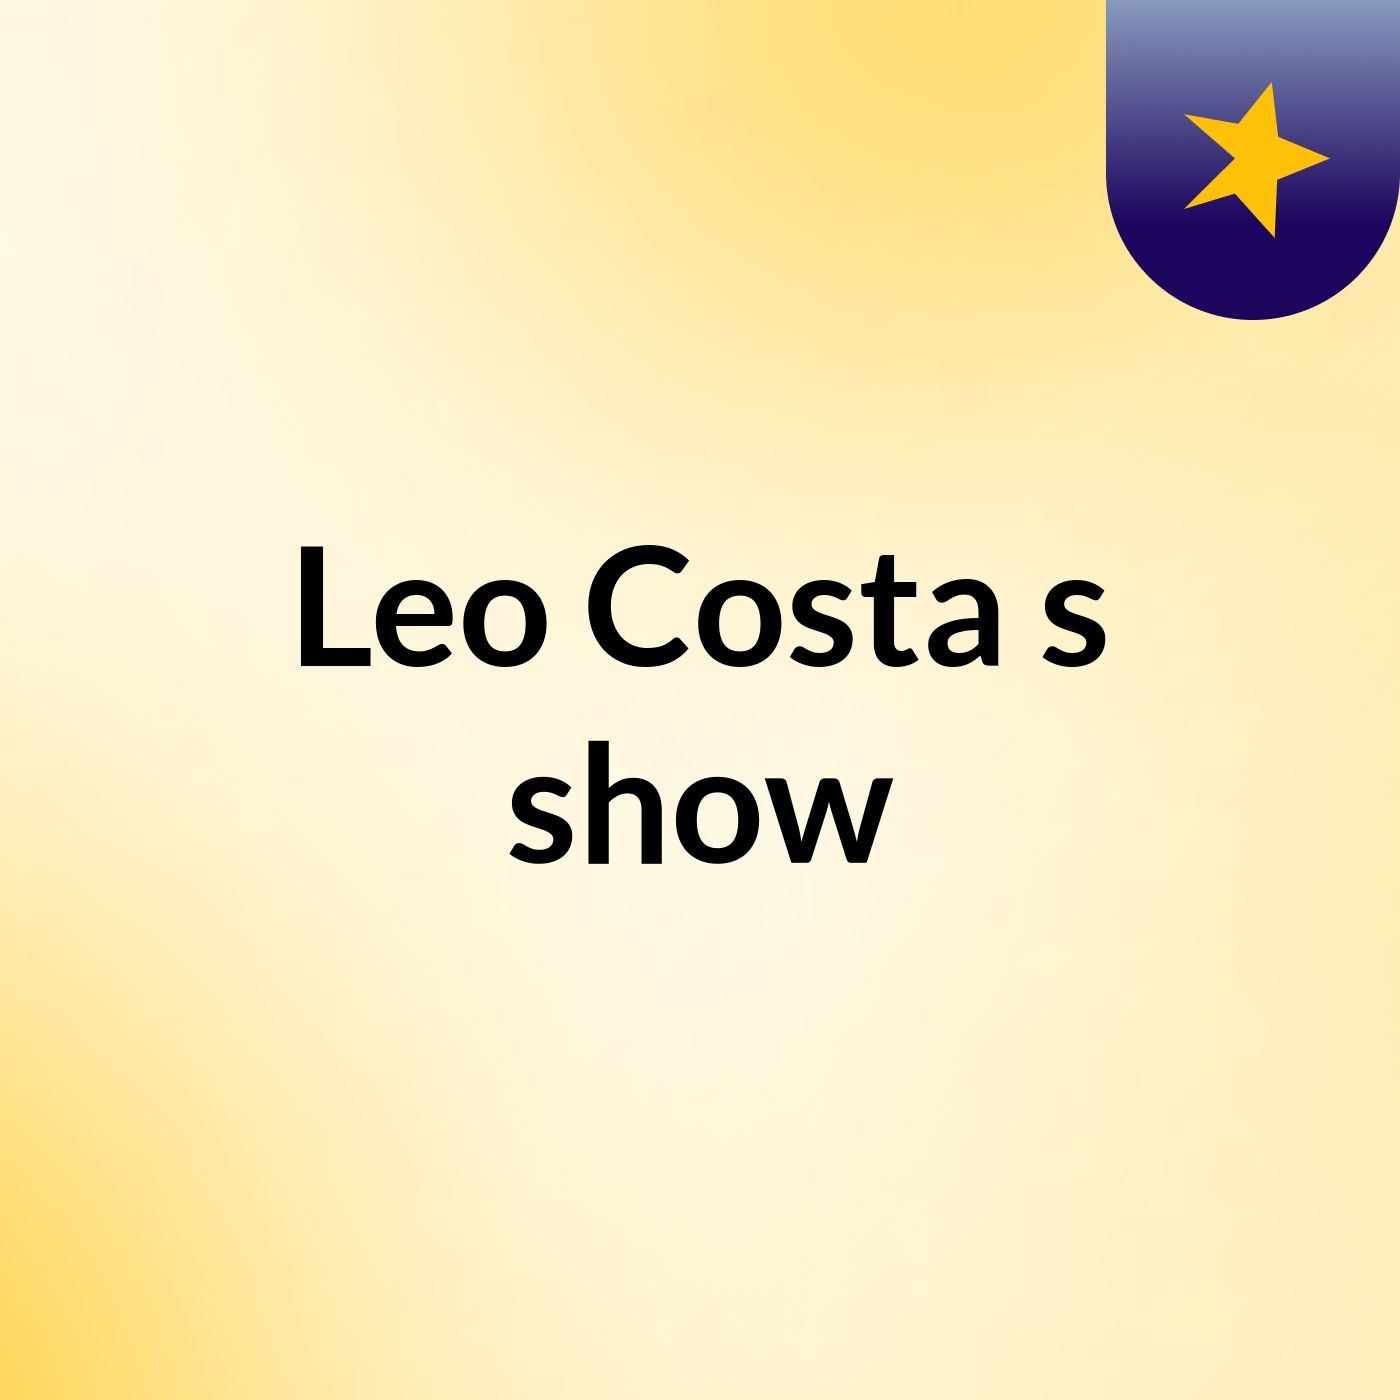 Leo Costa's show